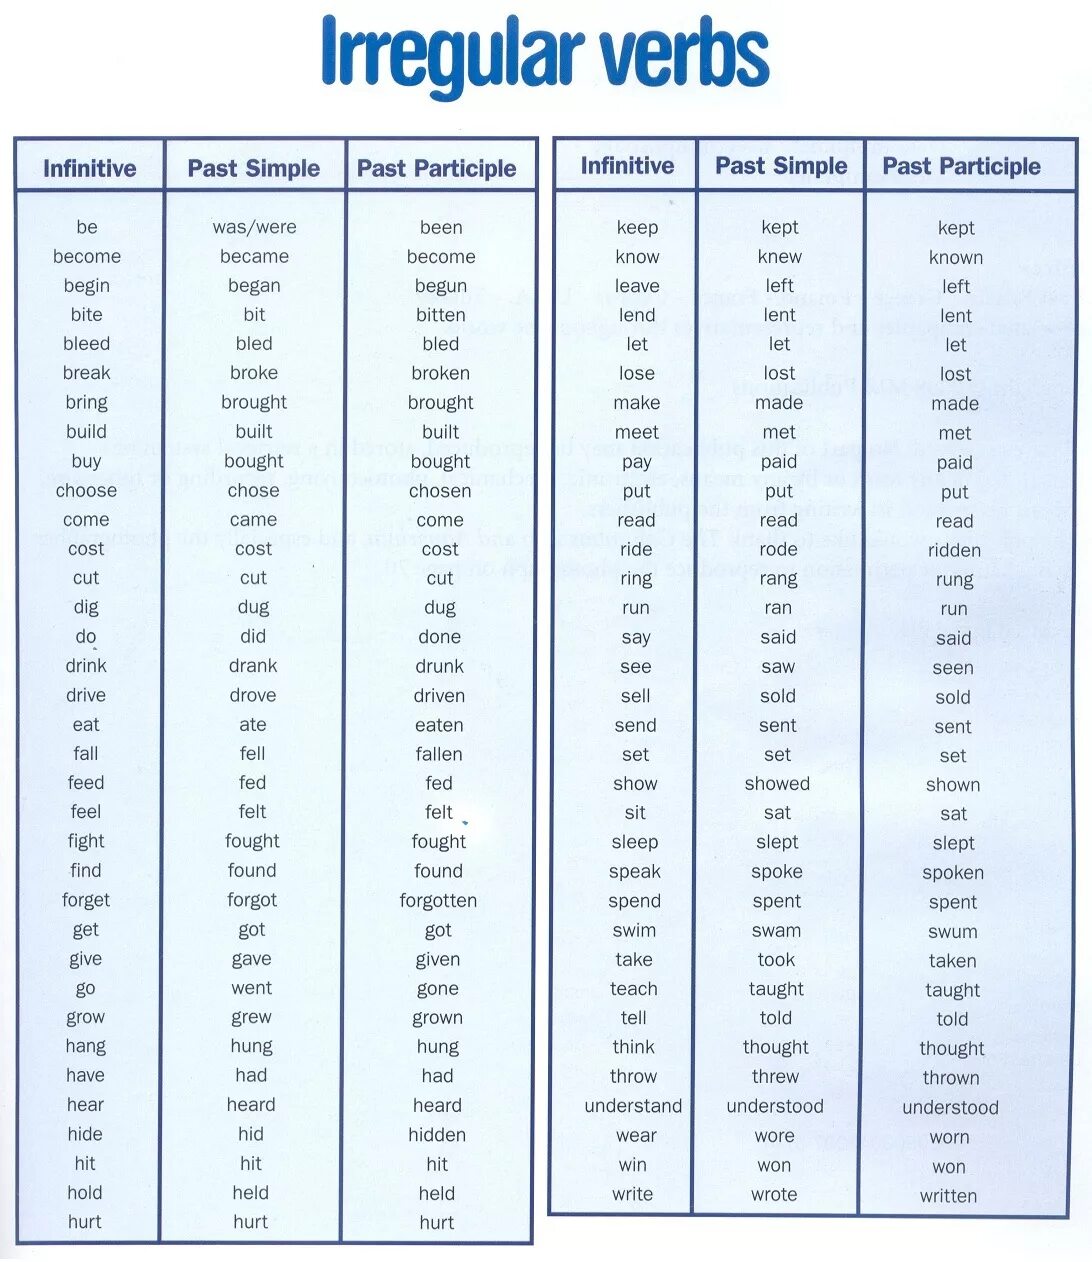 Past simple Irregular verbs таблица. Past simple таблица неправильных глаголов. Неправильные глаголы английского Irregular verbs. Past participle таблица неправильных глаголов.